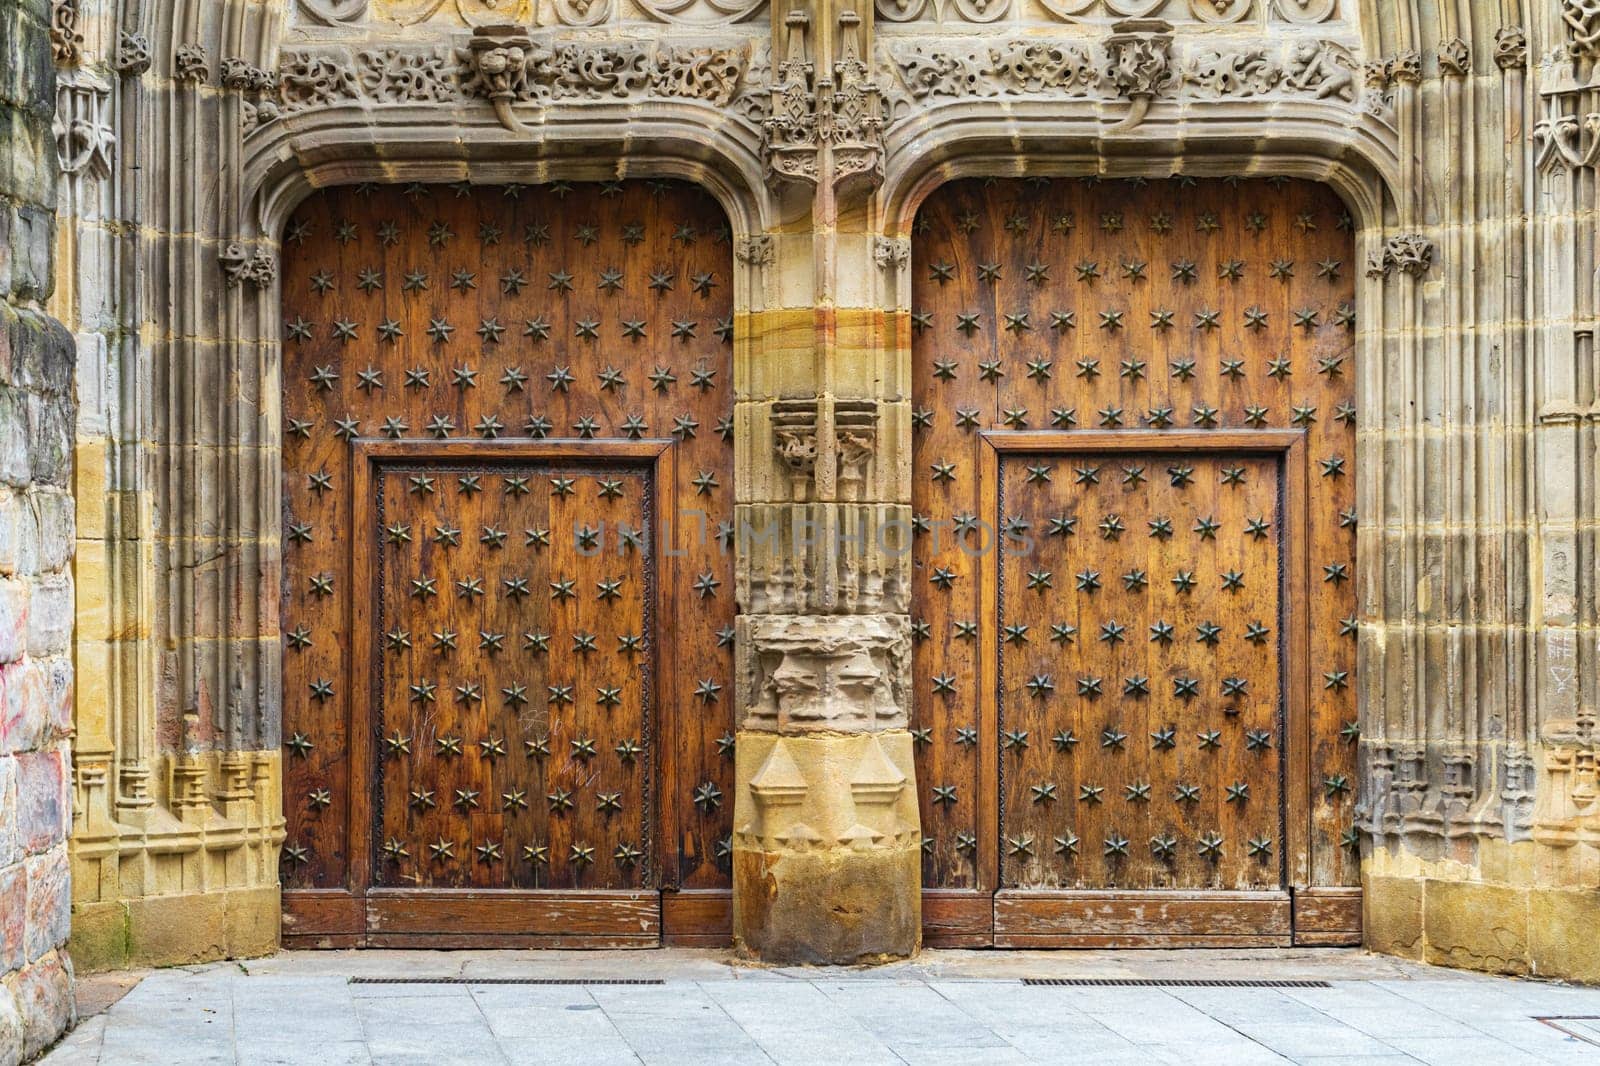 Old wooden doors Cathedral of Santiago, Bilbao, Spain. by paca-waca